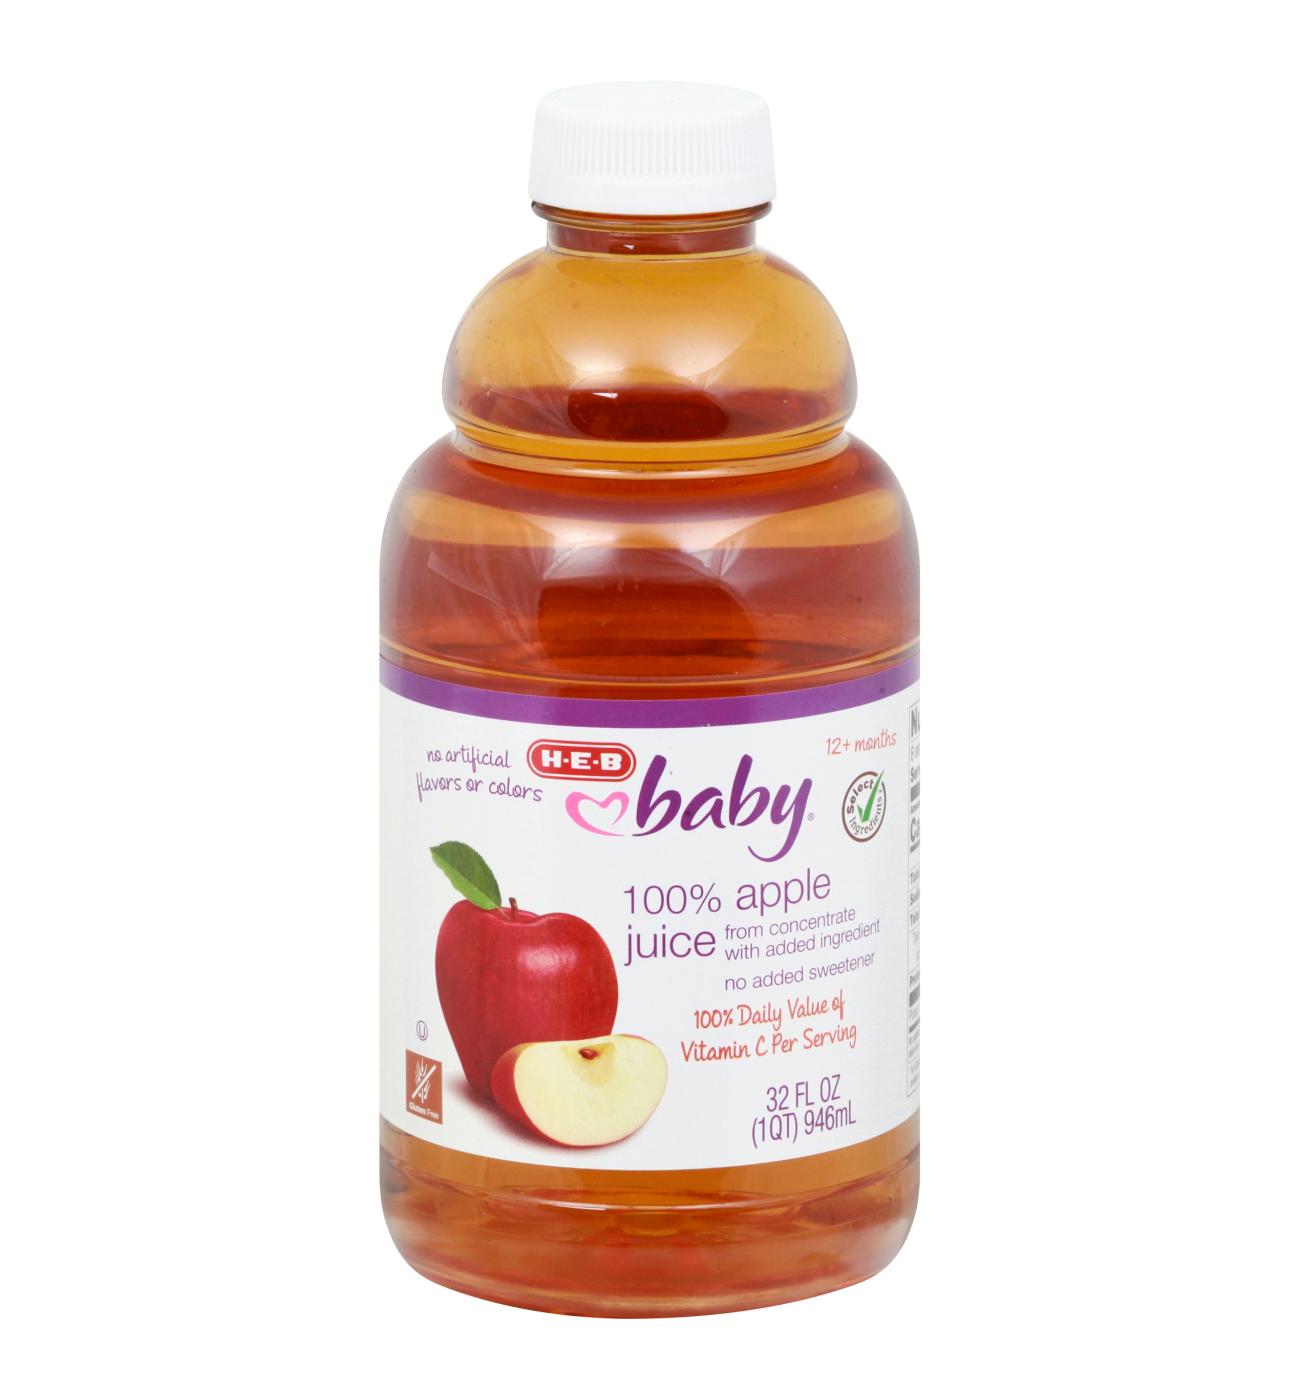 H-E-B Baby 100% Apple Juice; image 1 of 2